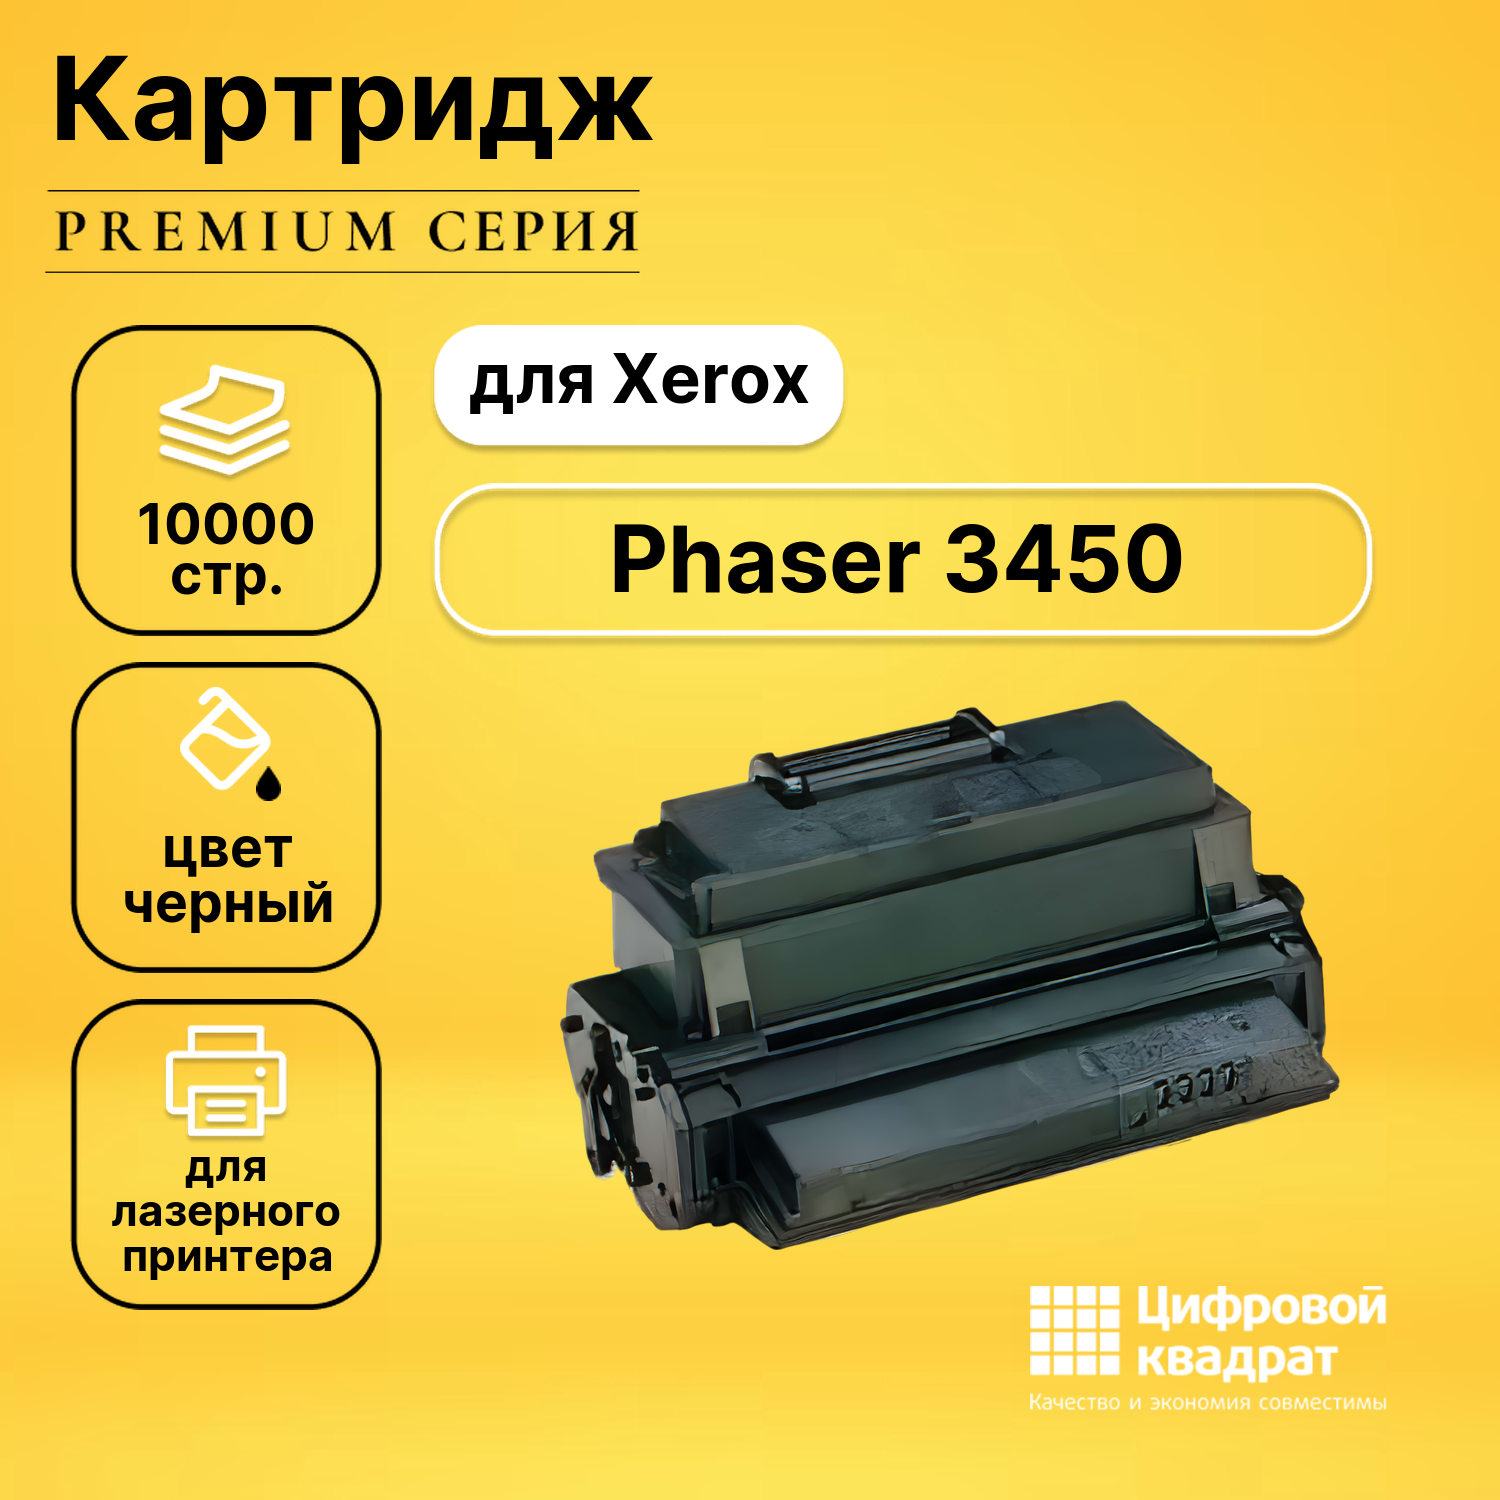 Картридж DS для Xerox Phaser 3450 совместимый